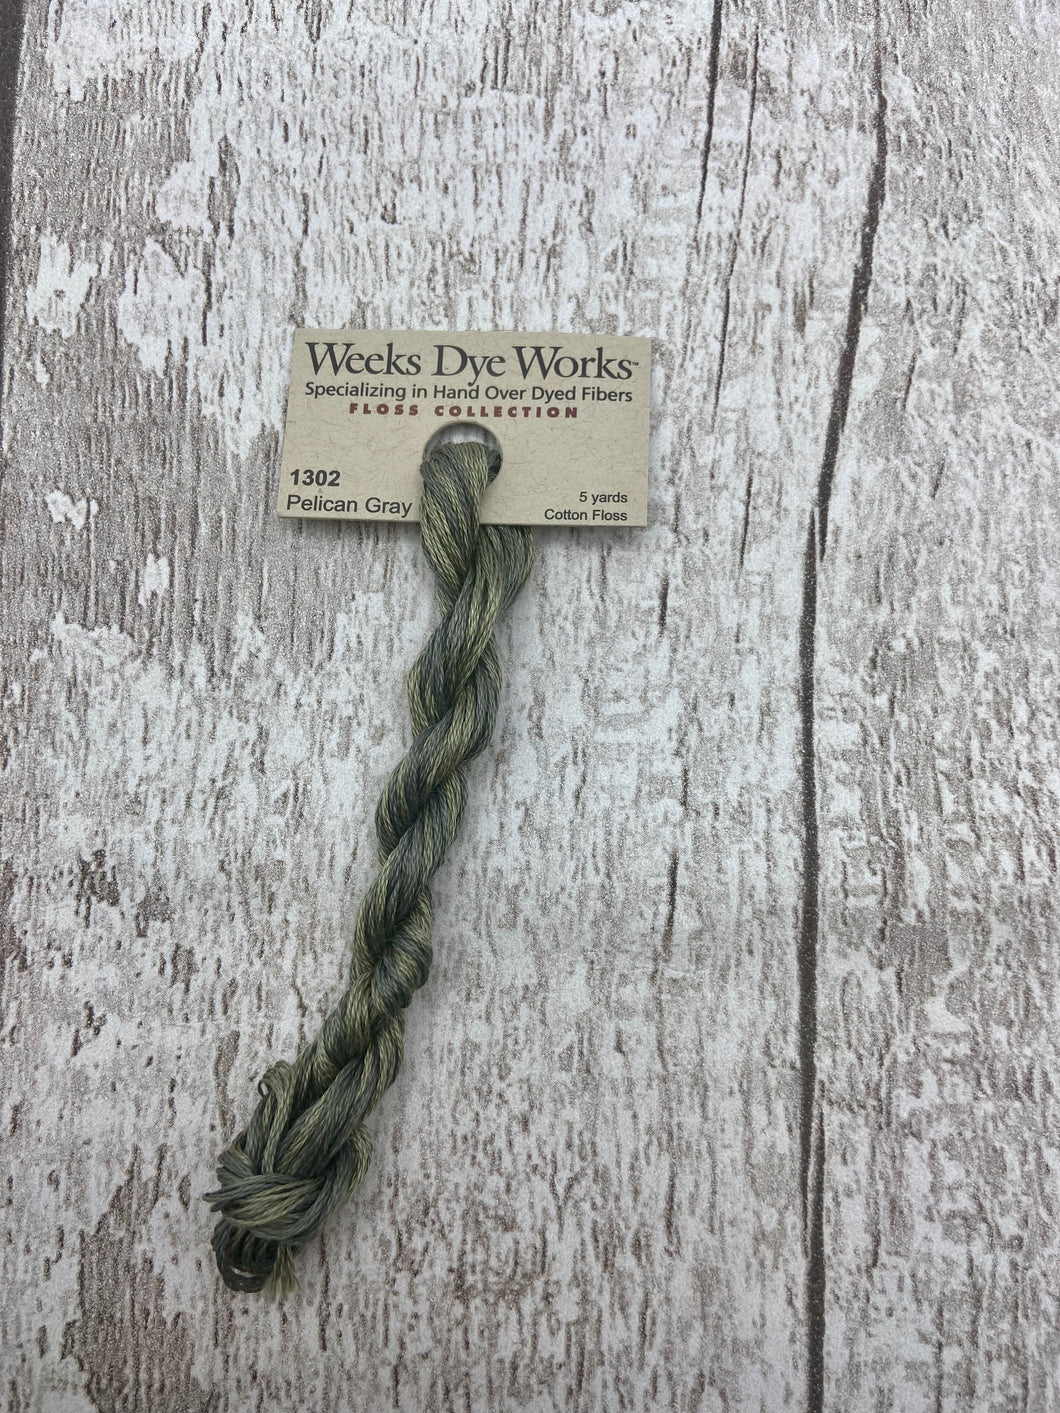 Pelican Grey (#1302) Weeks Dye Works, 6-strand cotton floss